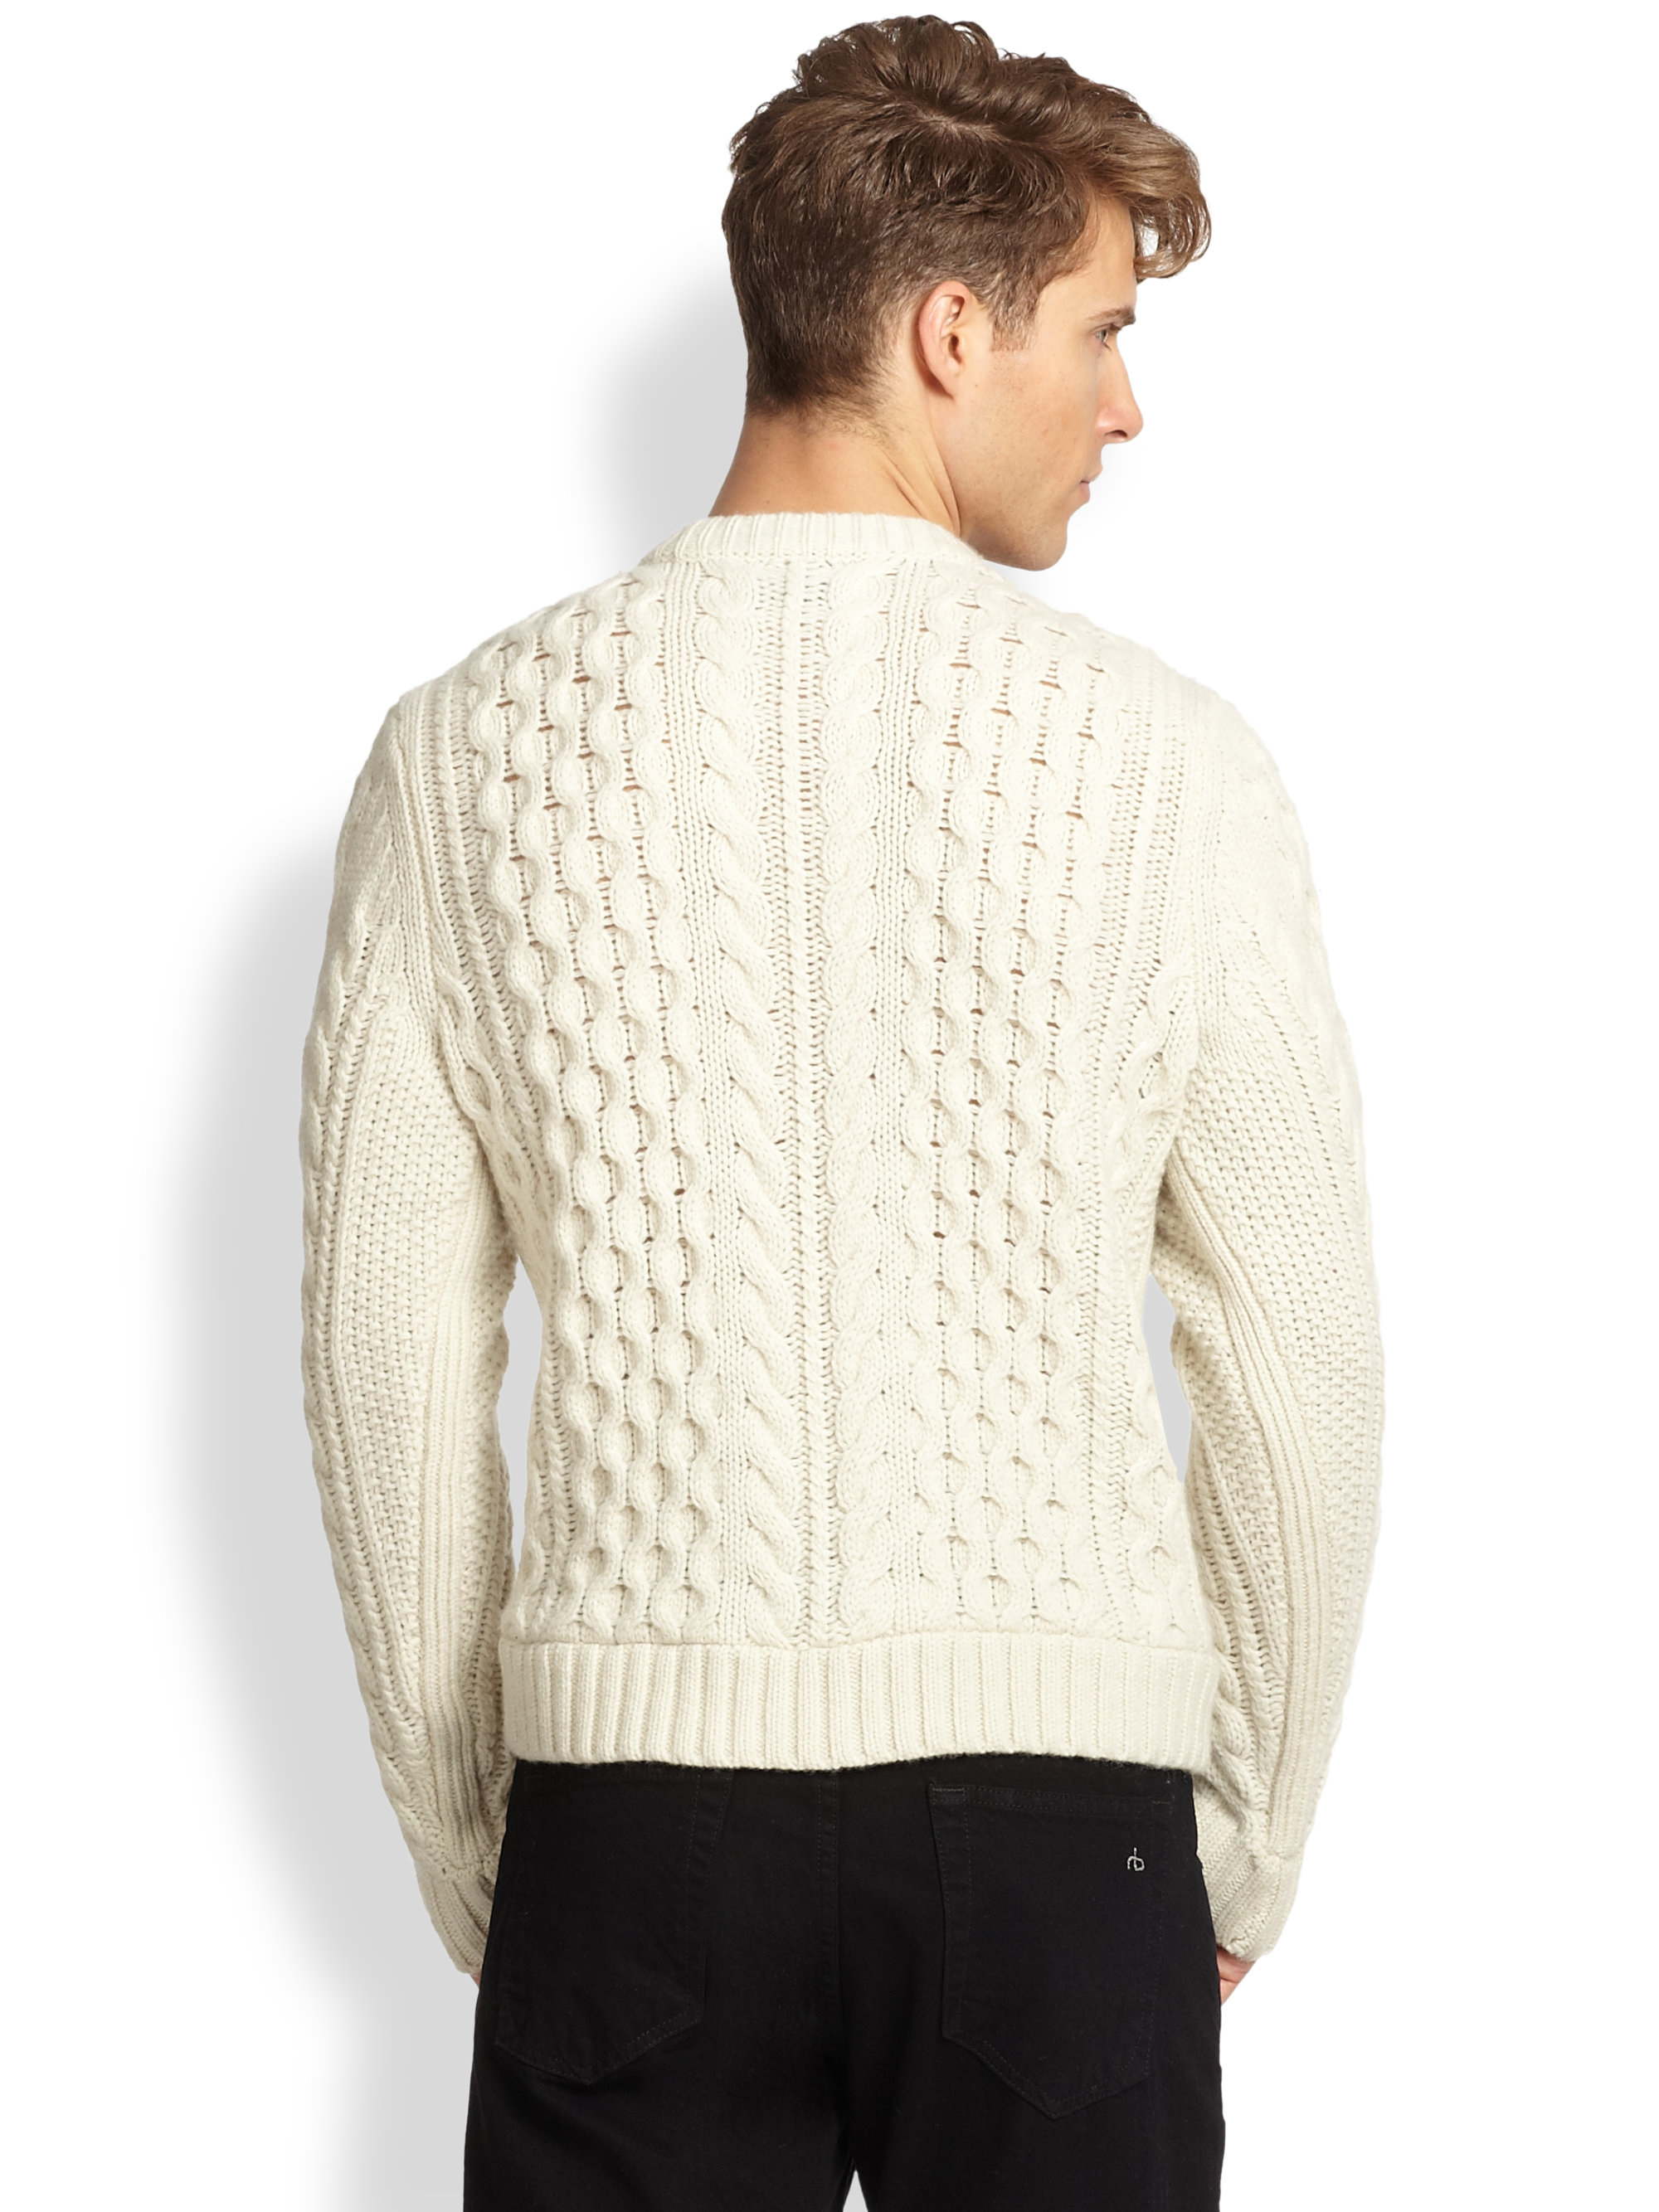 Rag & bone Trevor Cable Knit Wool Sweater in White for Men | Lyst